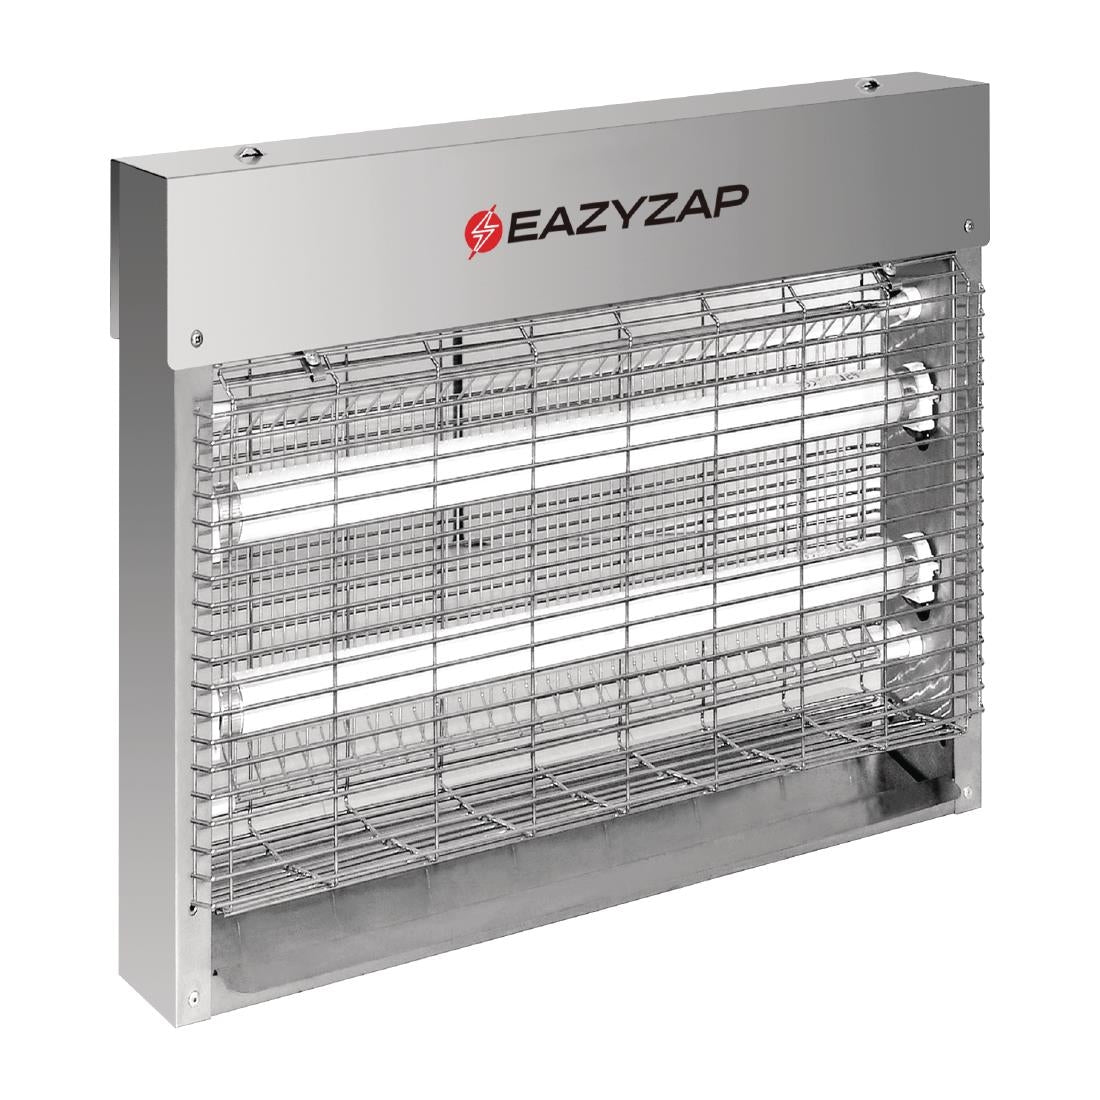 FP983 Eazyzap Energy Efficient Stainless Steel LED Fly Killer 30mÃ‚Â²